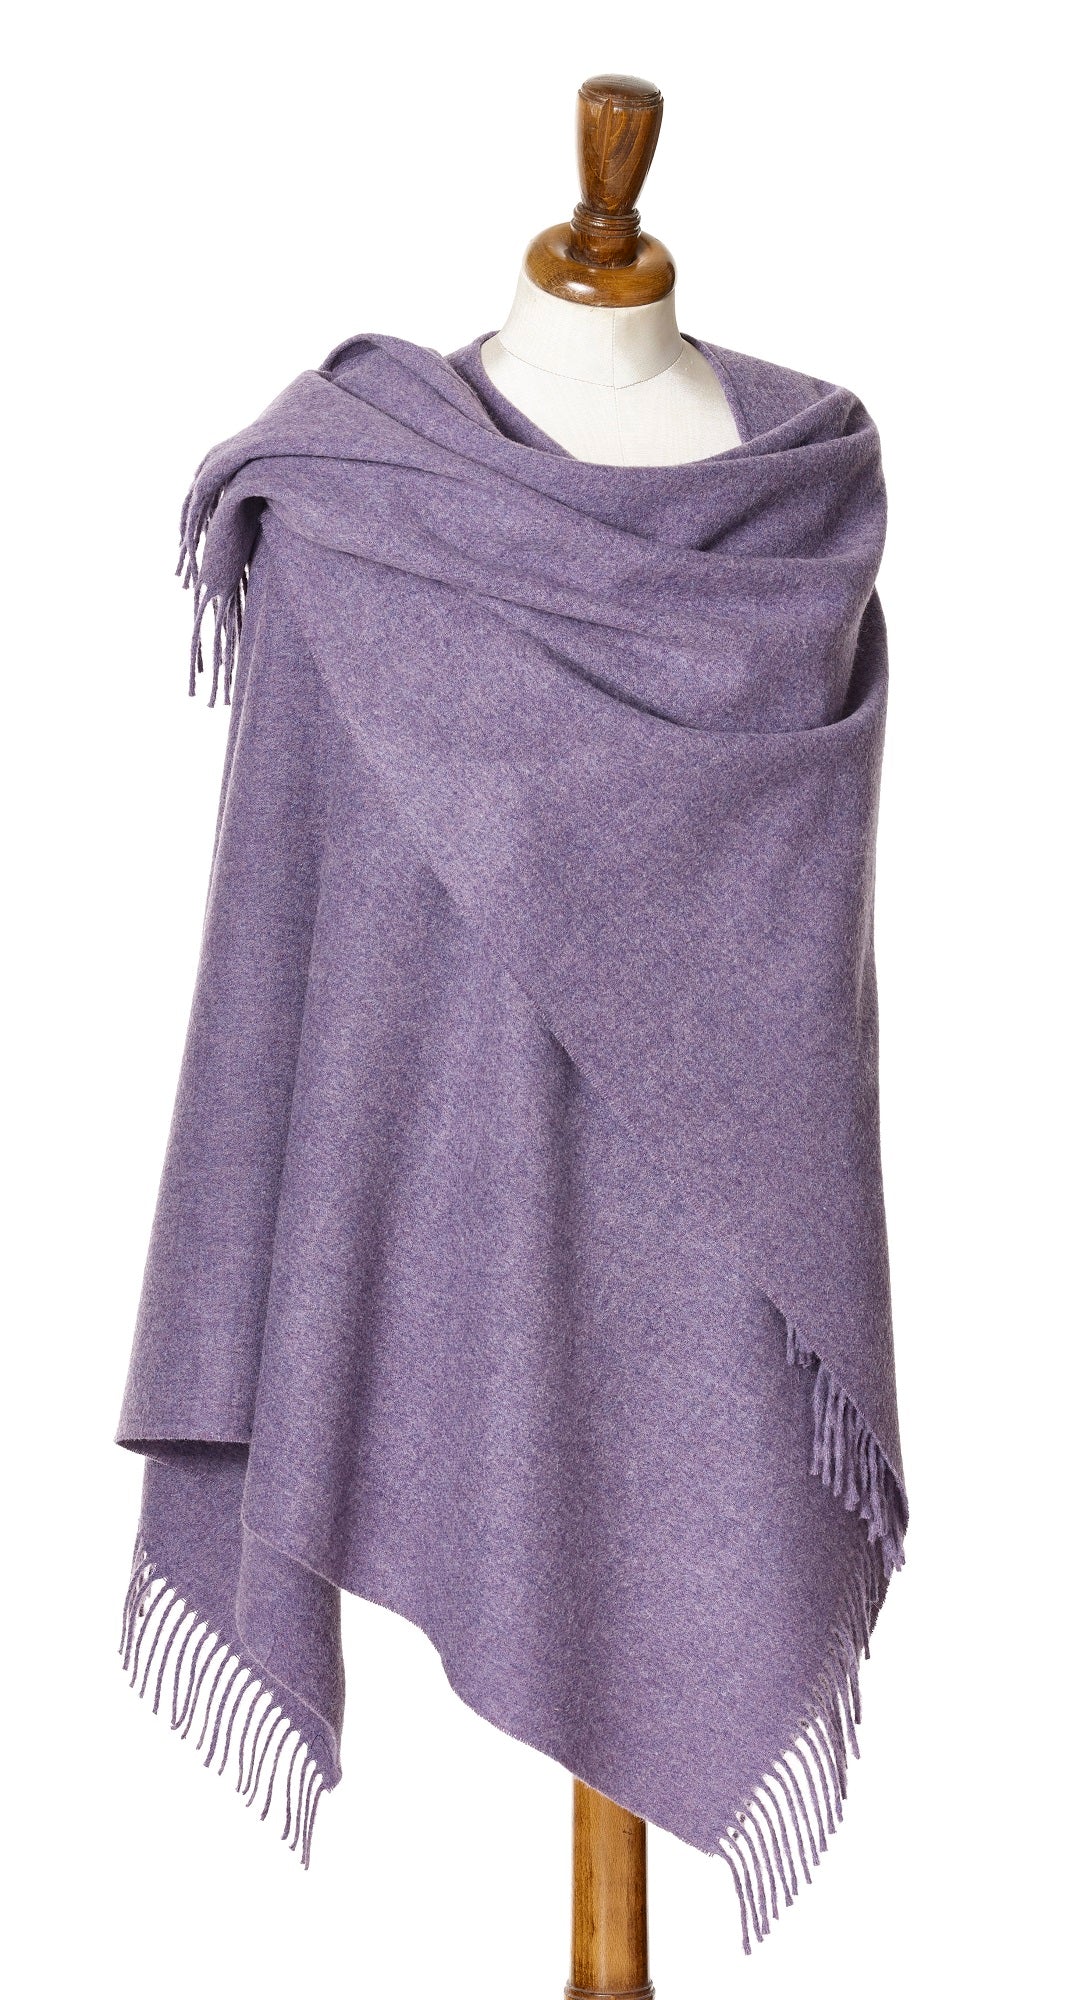 Blanket Scarf - Shawl - Stole - Wrap - Plain Luxury Lavender